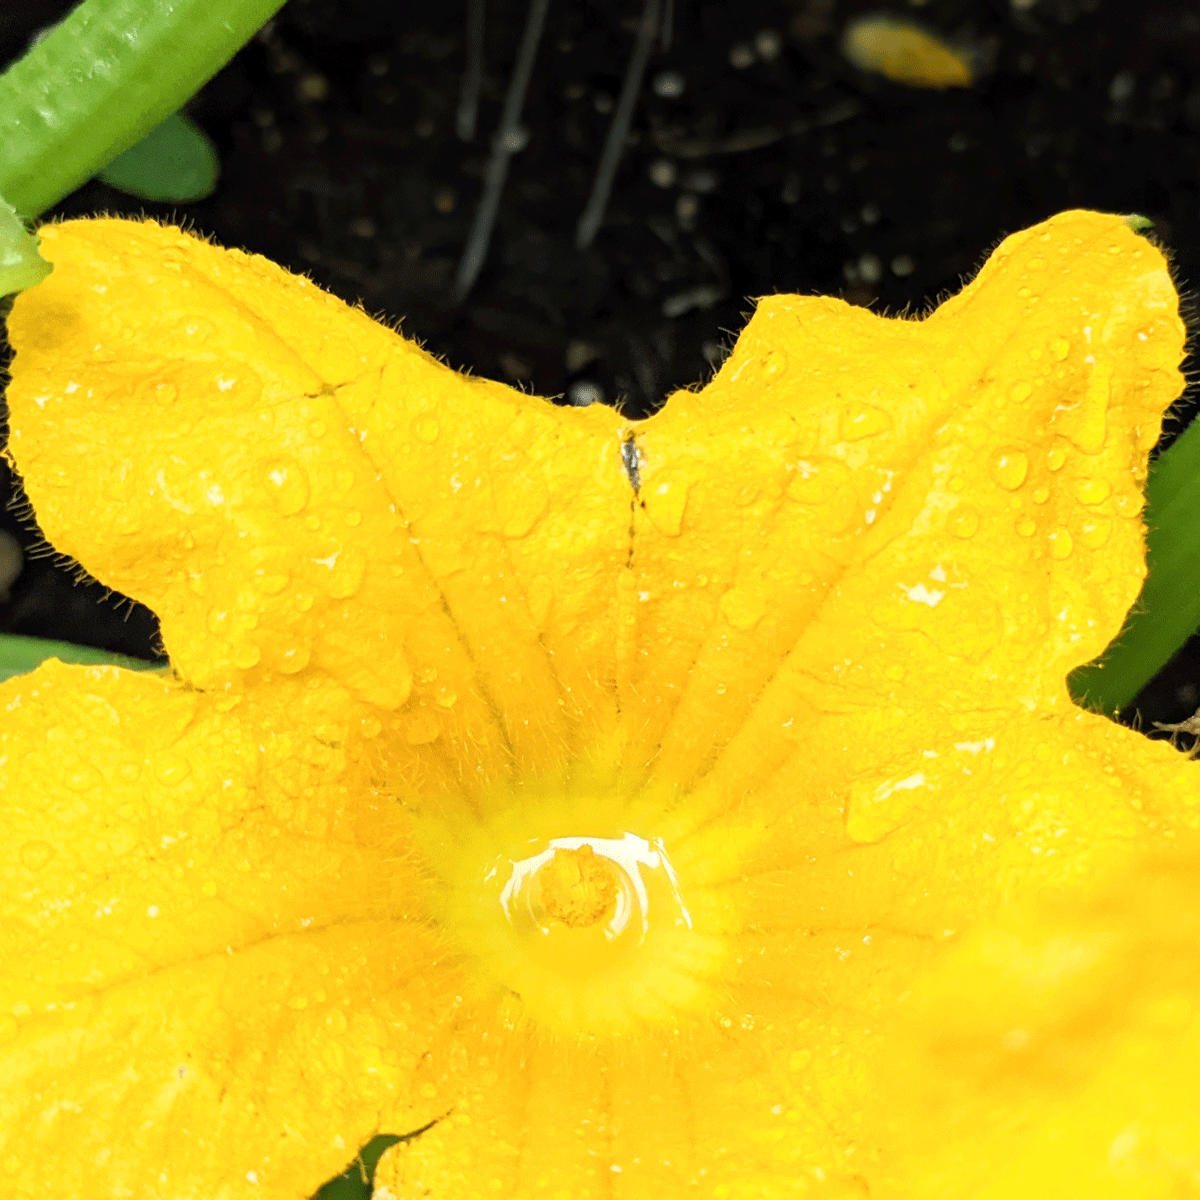 Squash Zucchini Blossom Filled with Rain